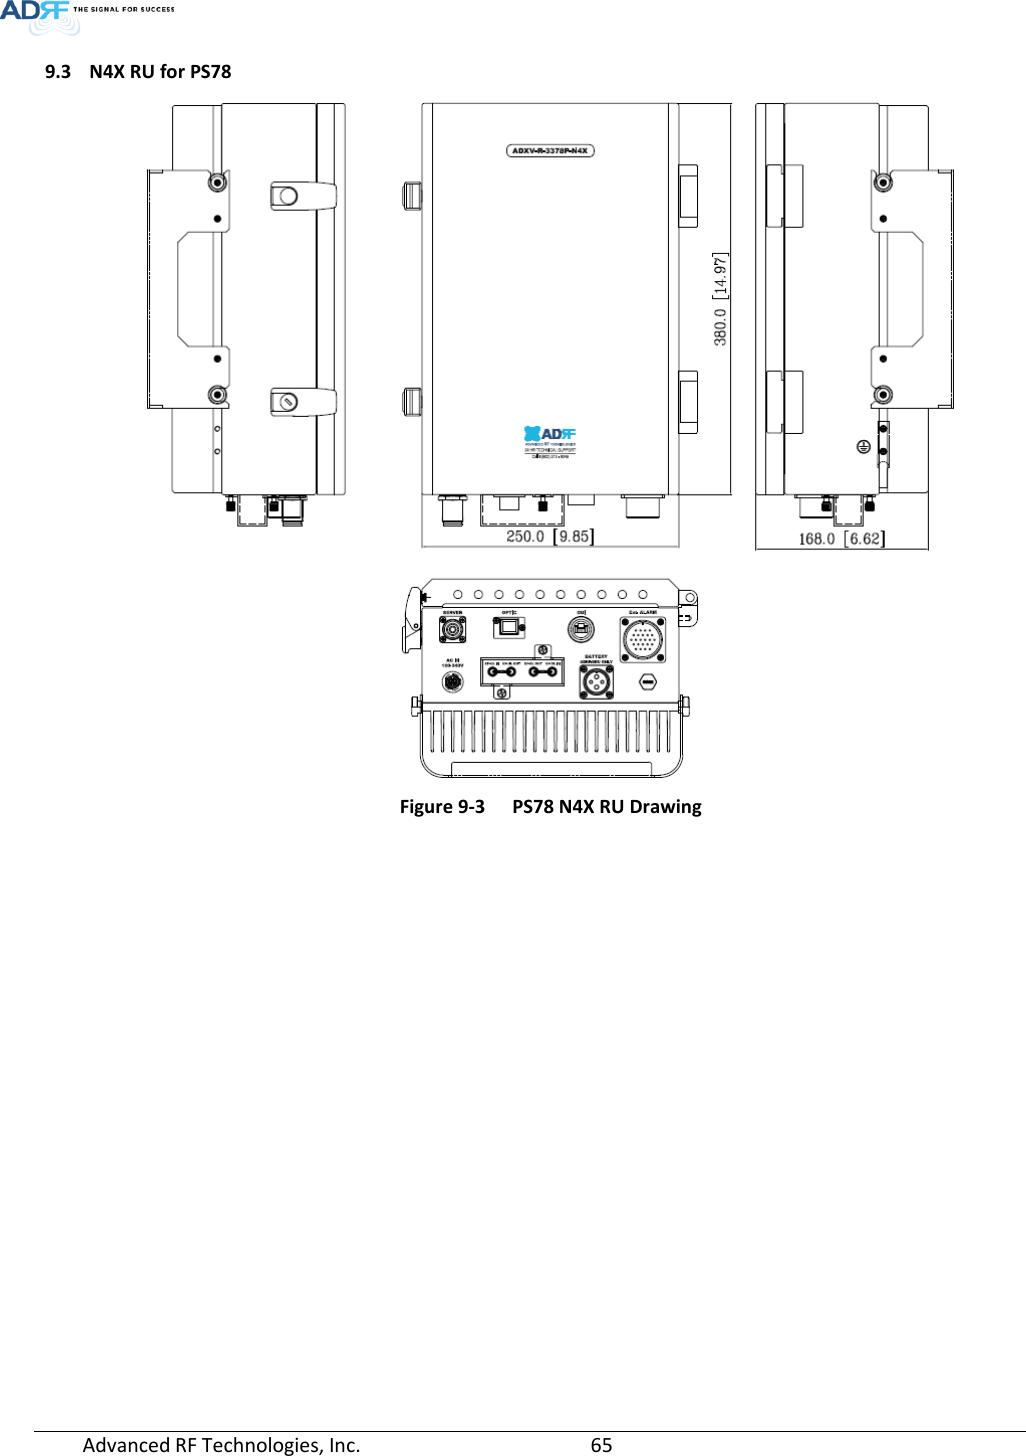 Page 65 of ADRF KOREA ADXV-R-336 DAS (Distributed Antenna System) User Manual ADXV DAS